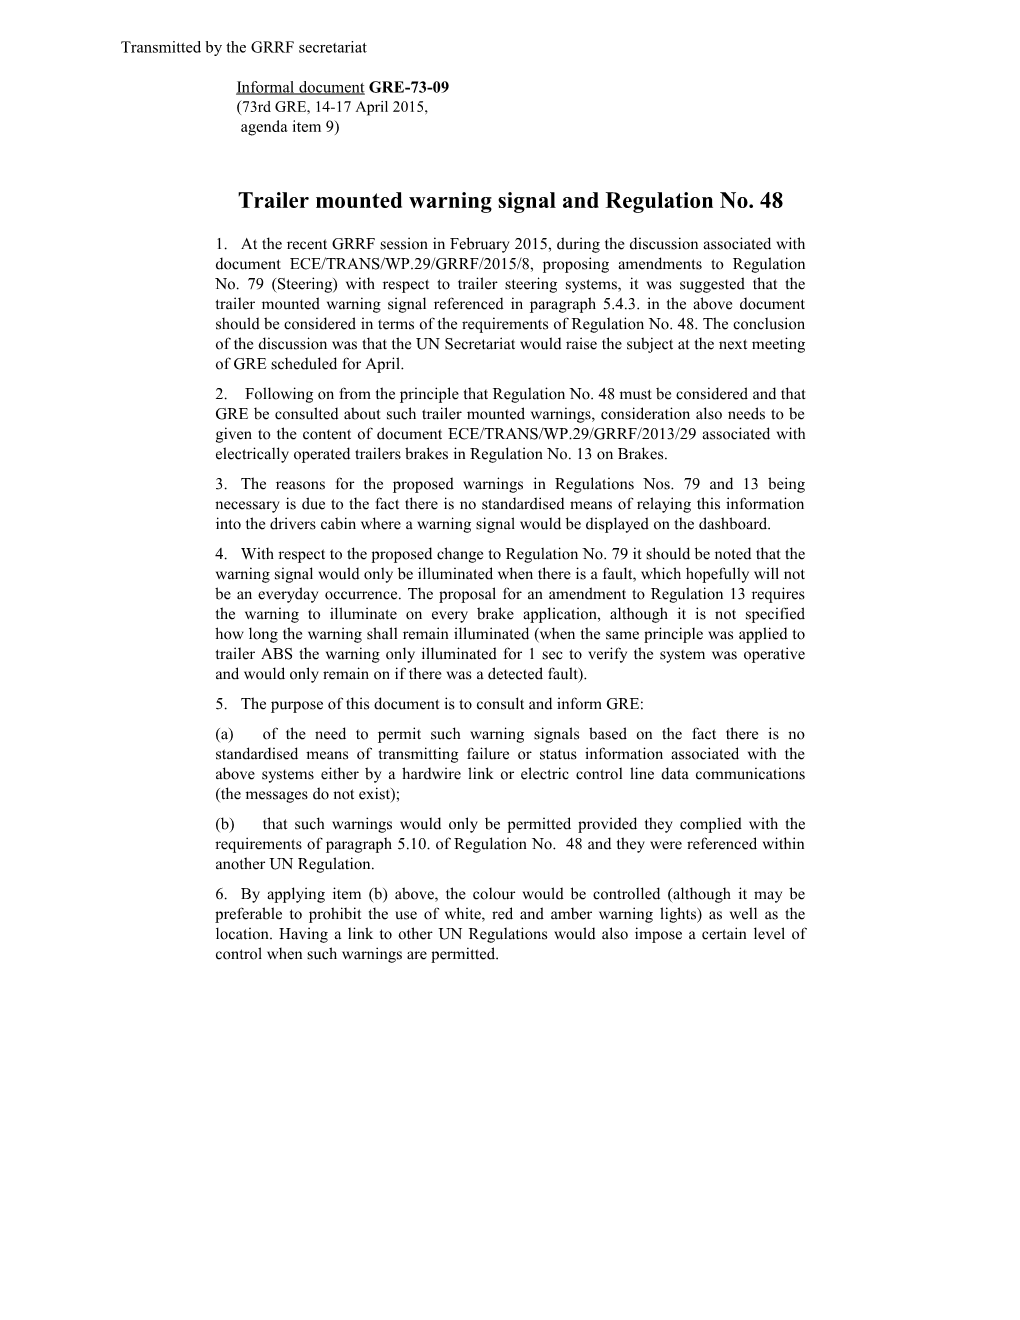 Trailer Mounted Warning Signal and Regulation No. 48